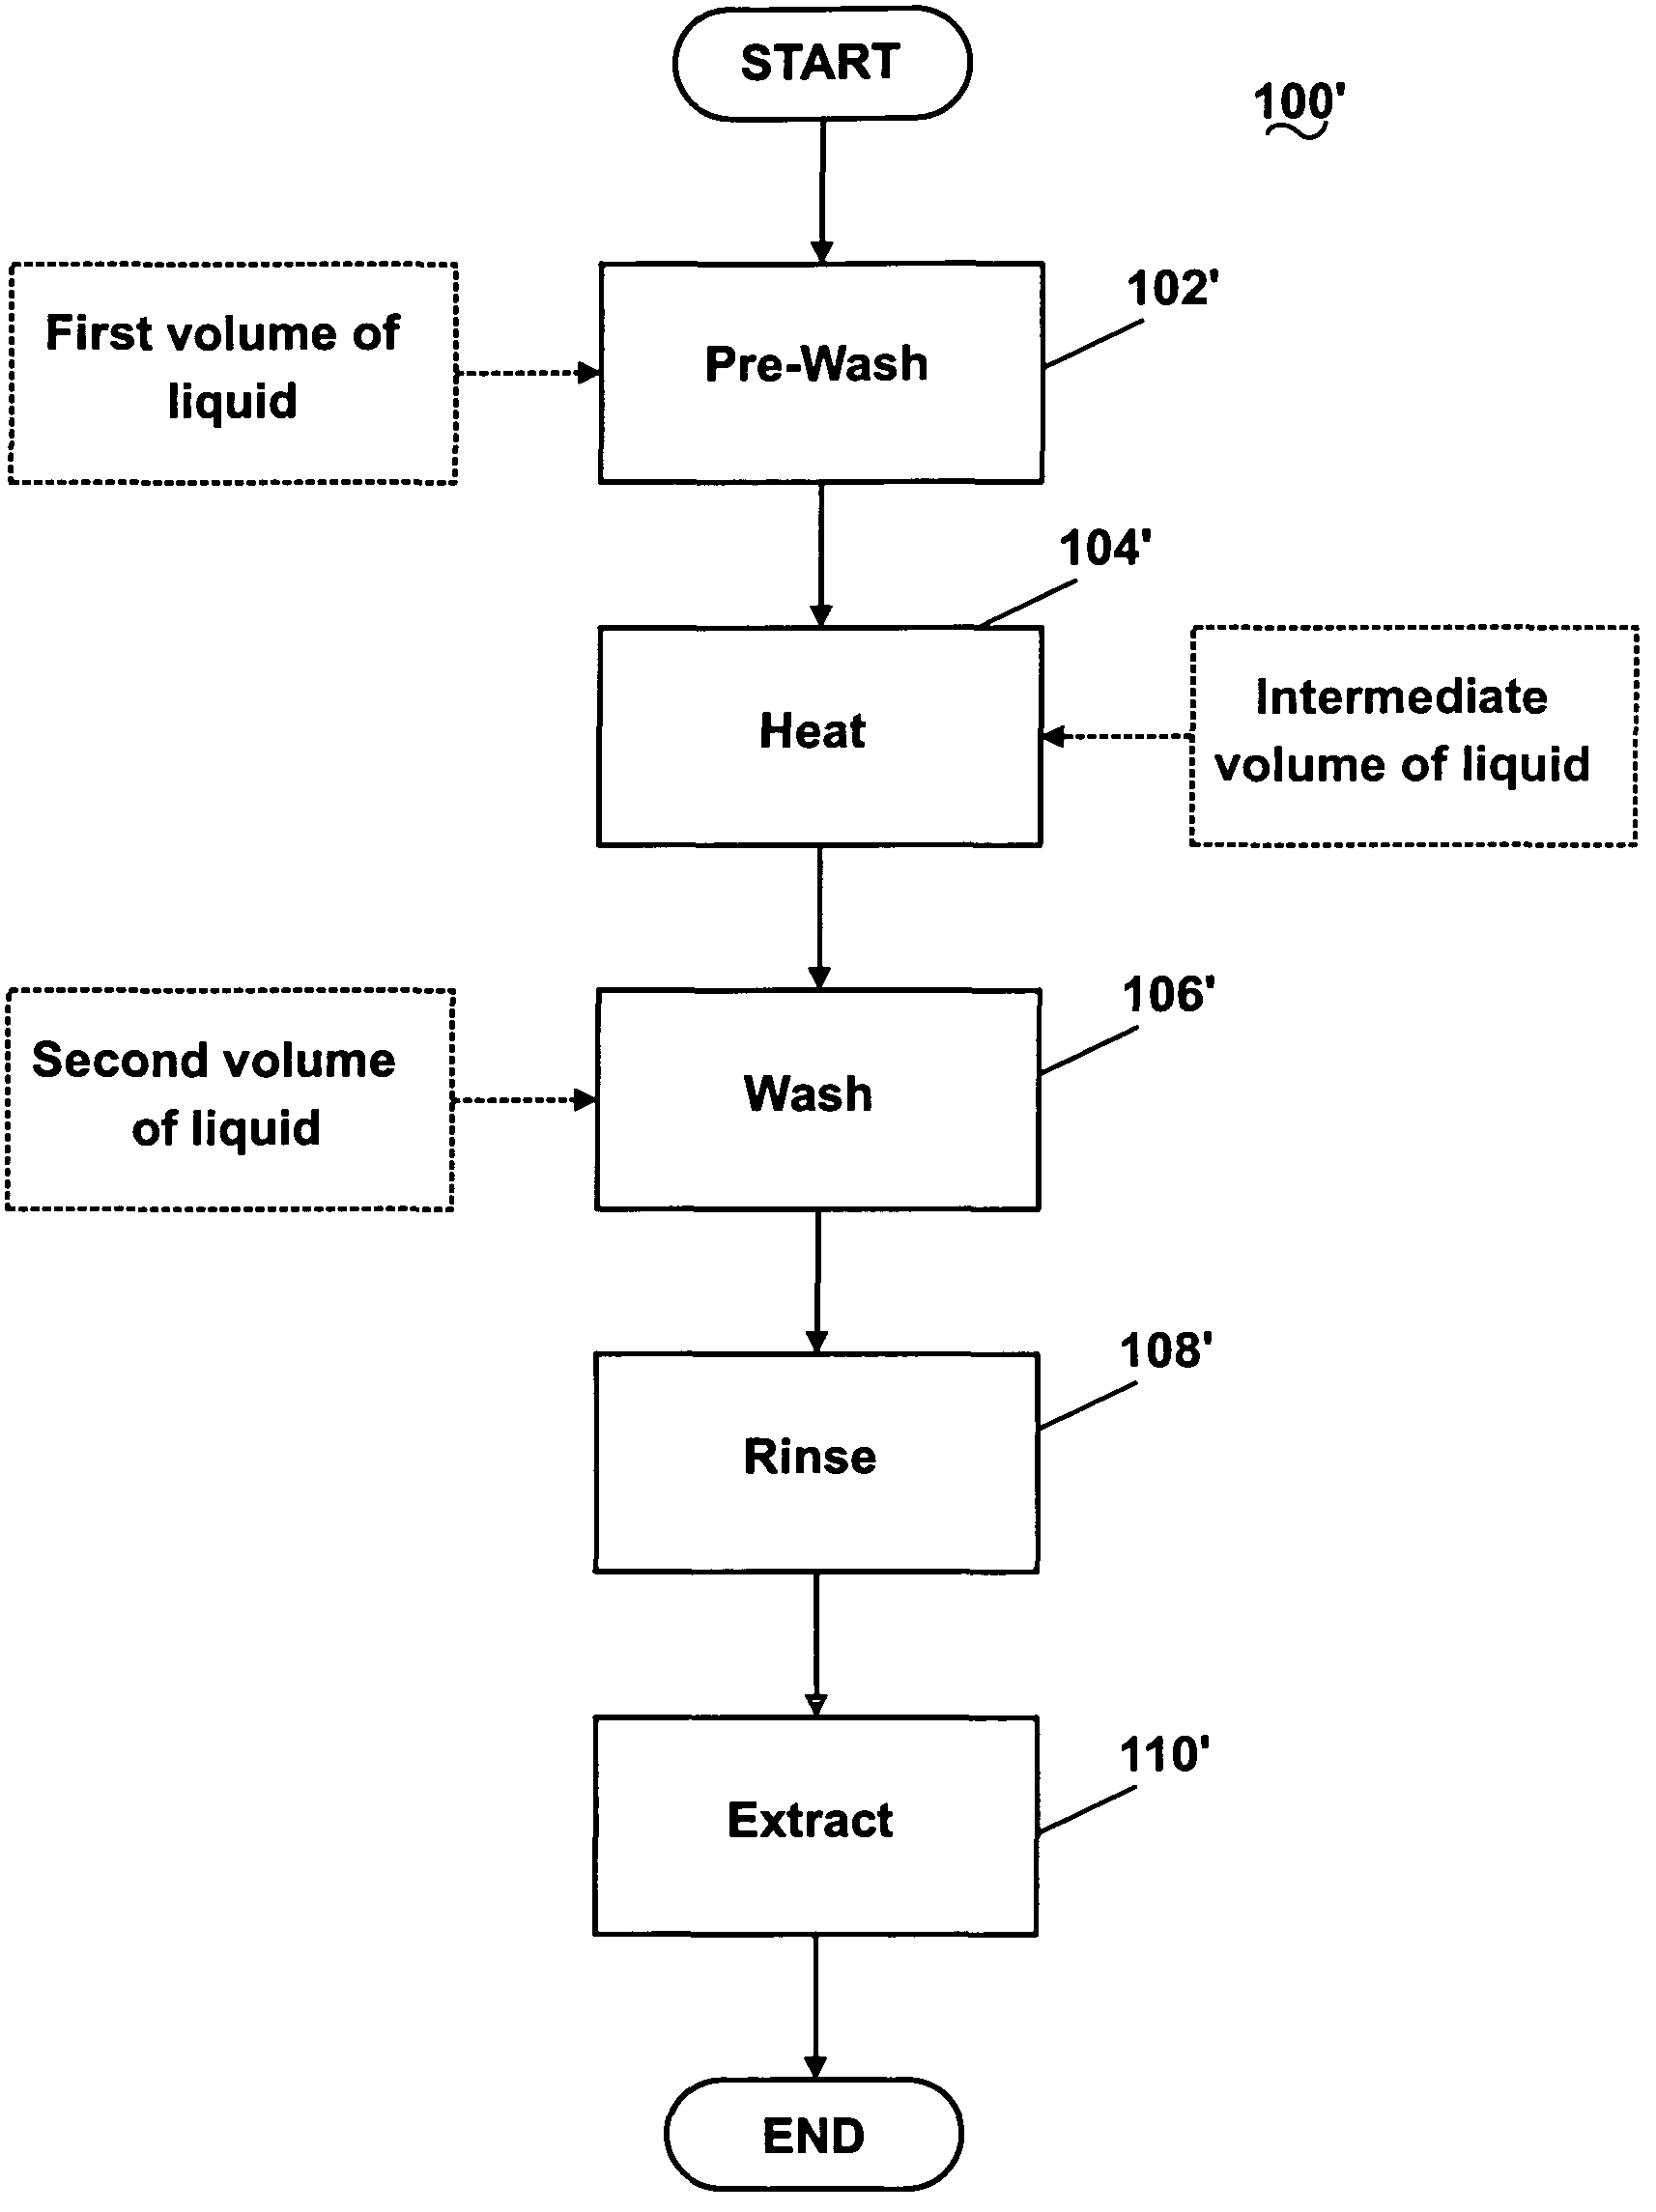 Steam washing machine operation method having a dual speed spin pre-wash